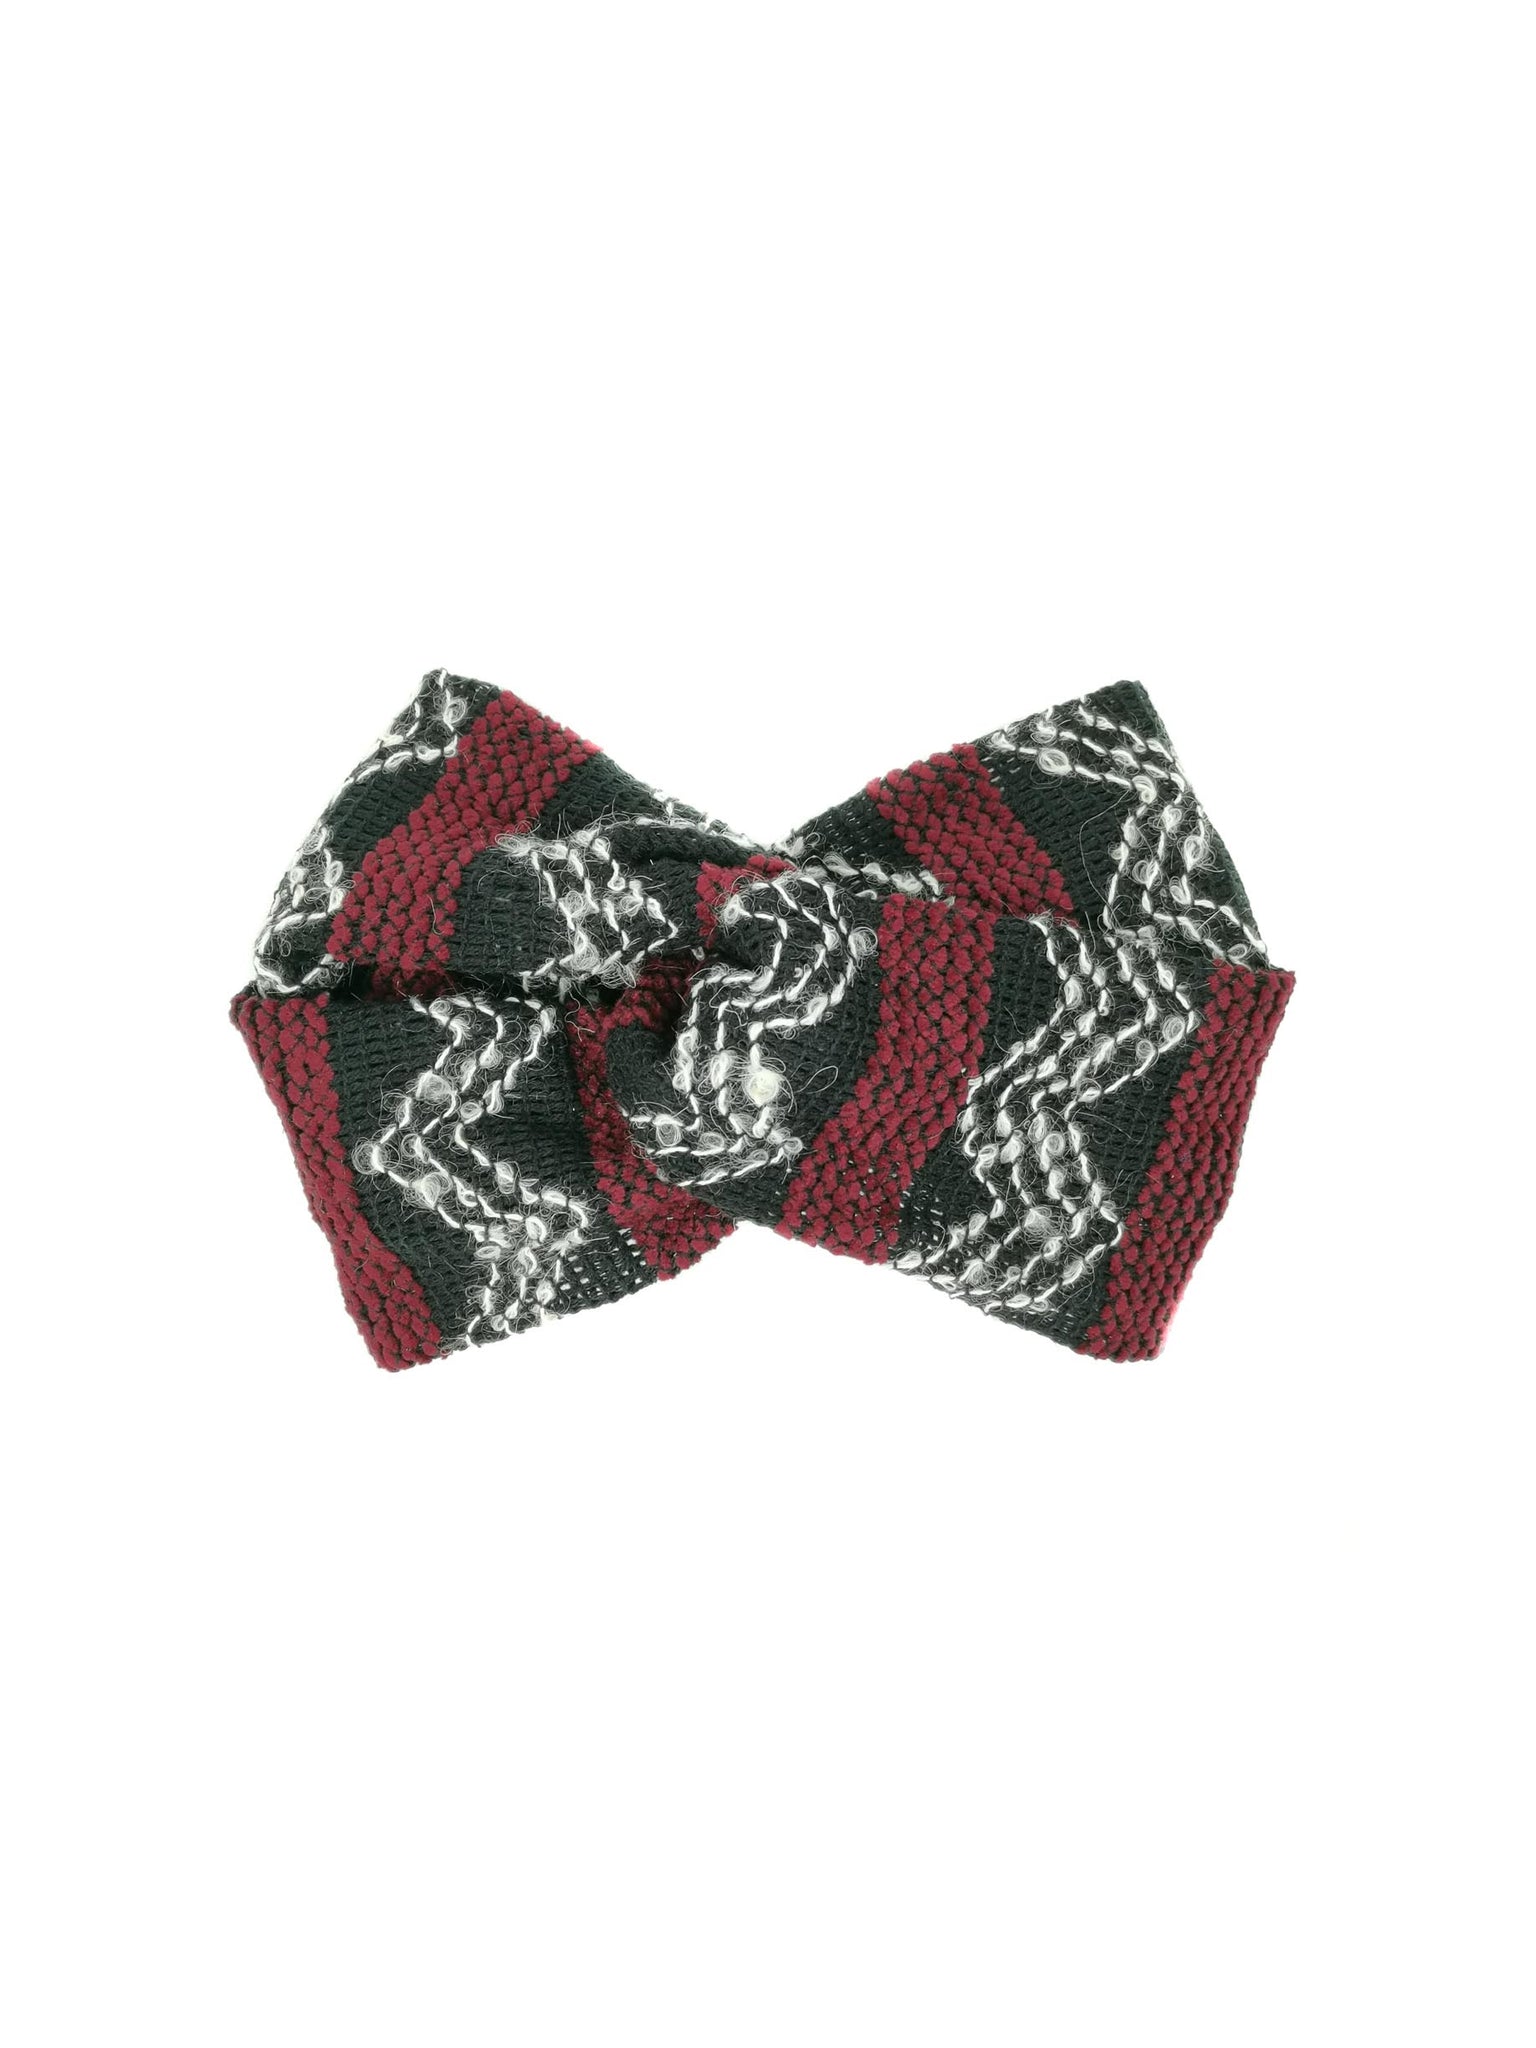 Black and burgundy wool knit headband